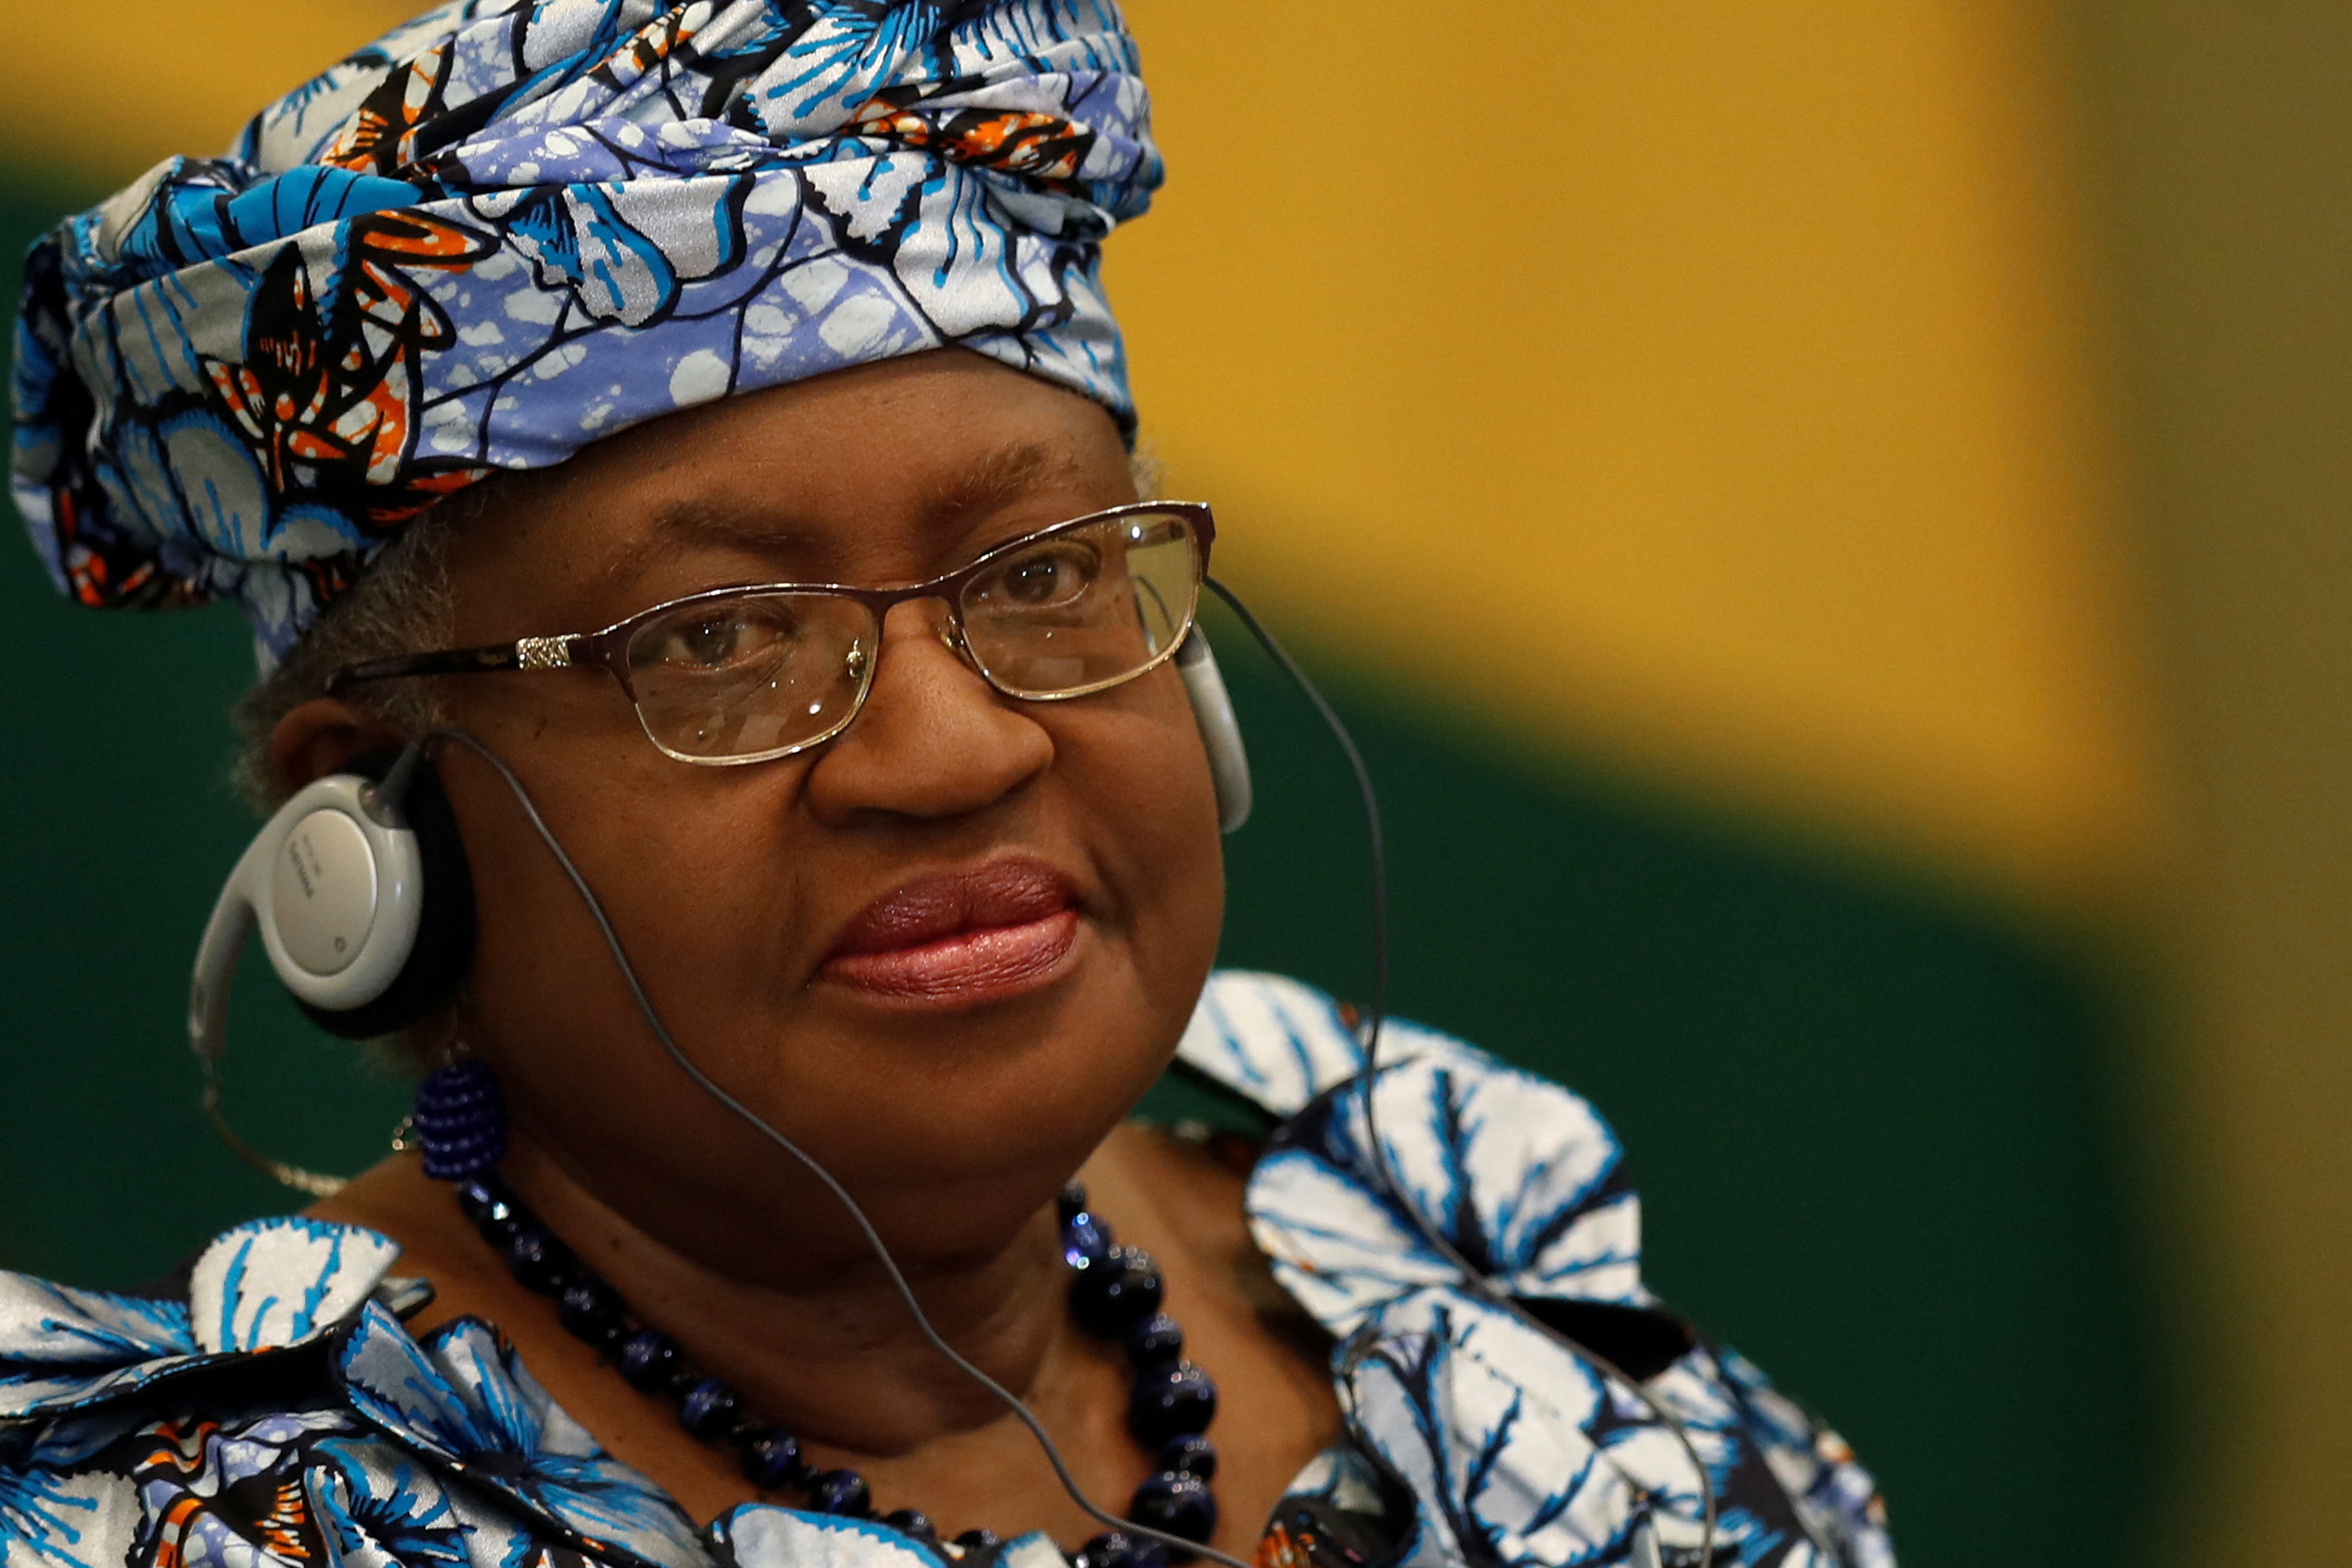 El Director General de la OMC, Okonjo-Iweala, visita Brasilia